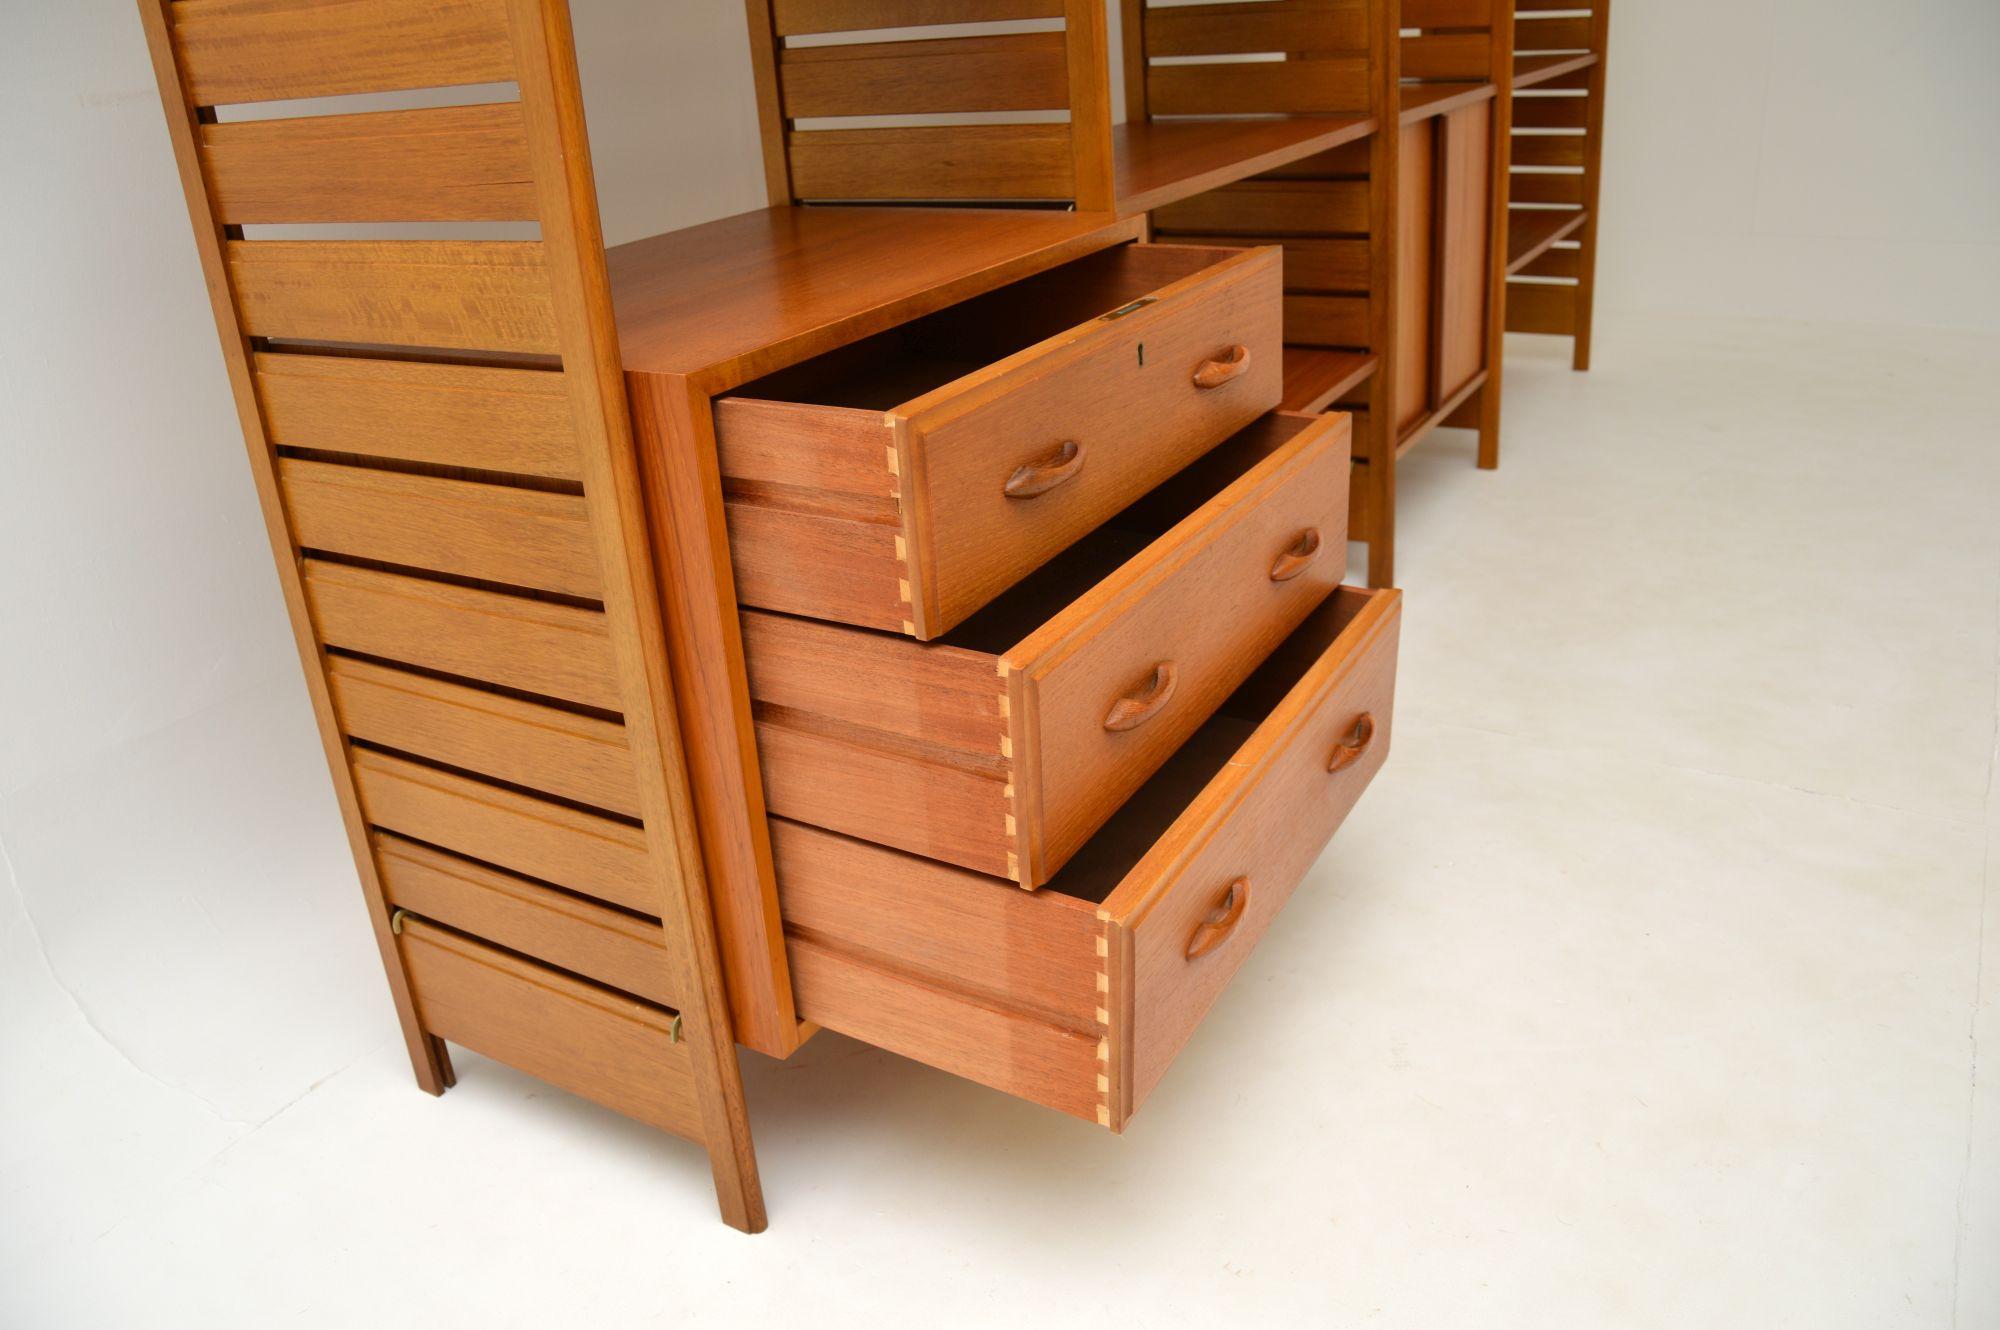 20th Century Staples Ladderax Vintage Bookcase / Cabinet / Room Divider in Teak